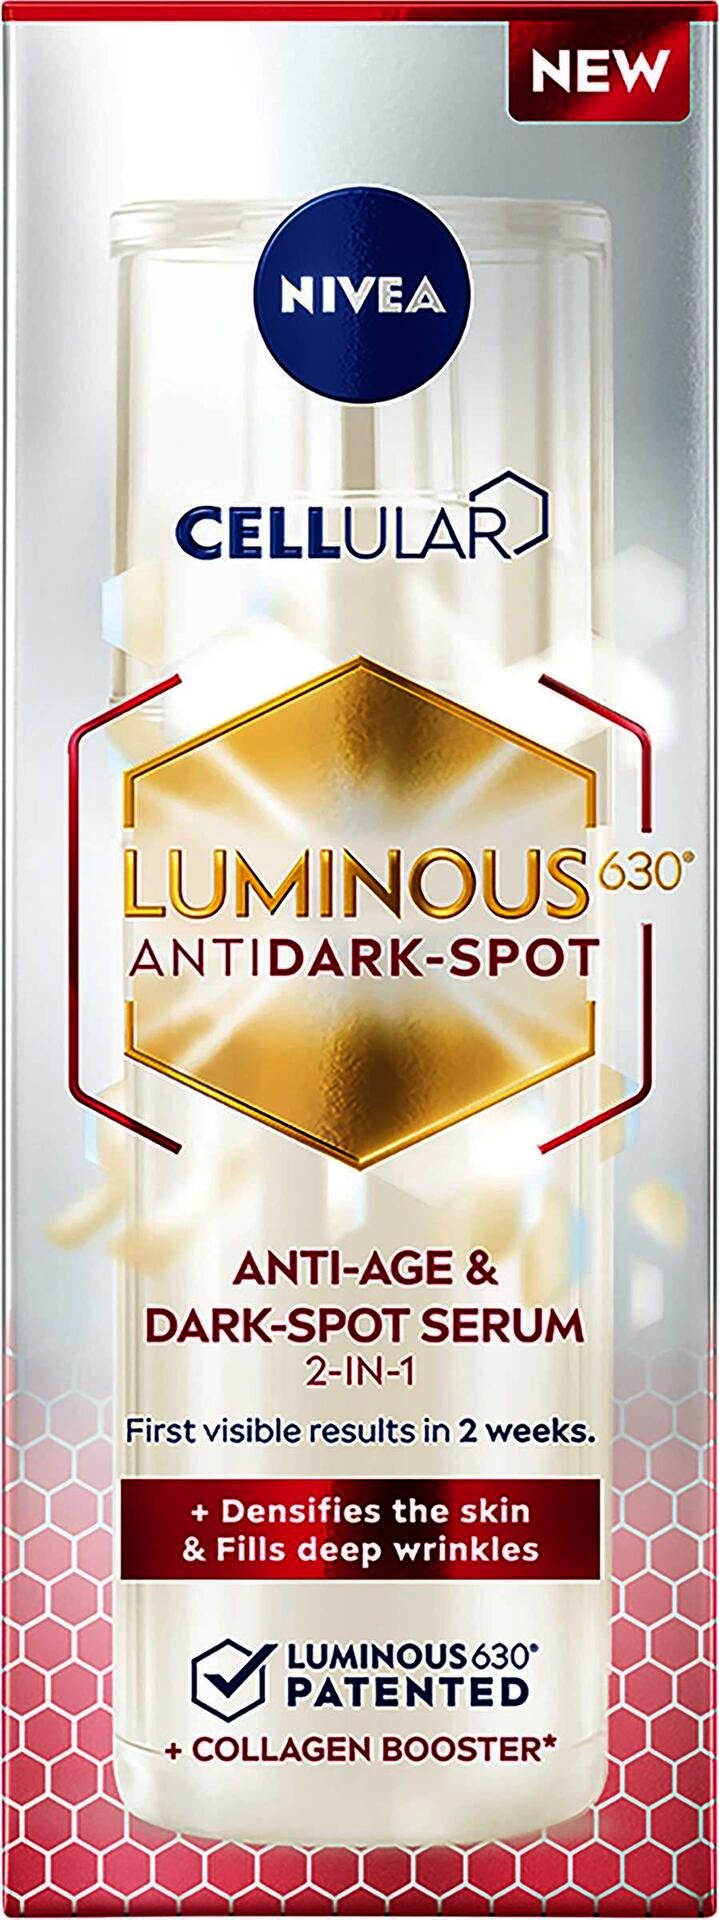 NIVEA Cellular Luminous630® Anti-Age & Dark-Spot Serum 30 ml